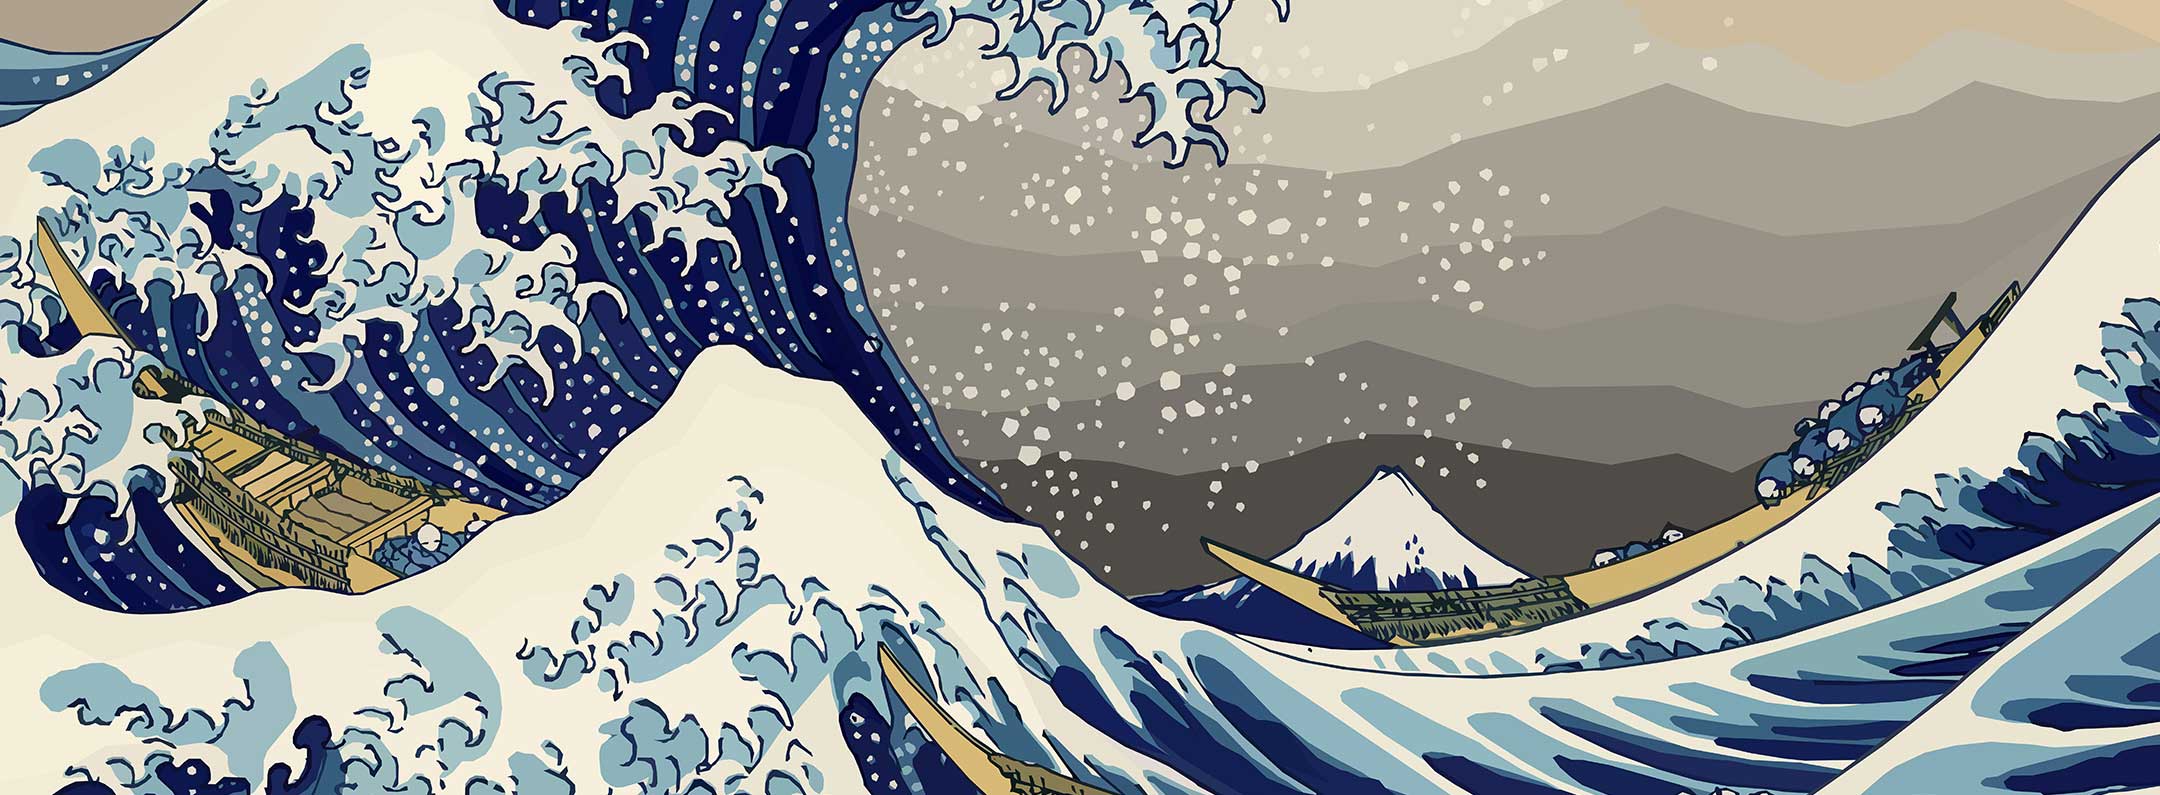 The Great Wave of Kanagawa Wallpaper Mural | Ever Wallpaper UK